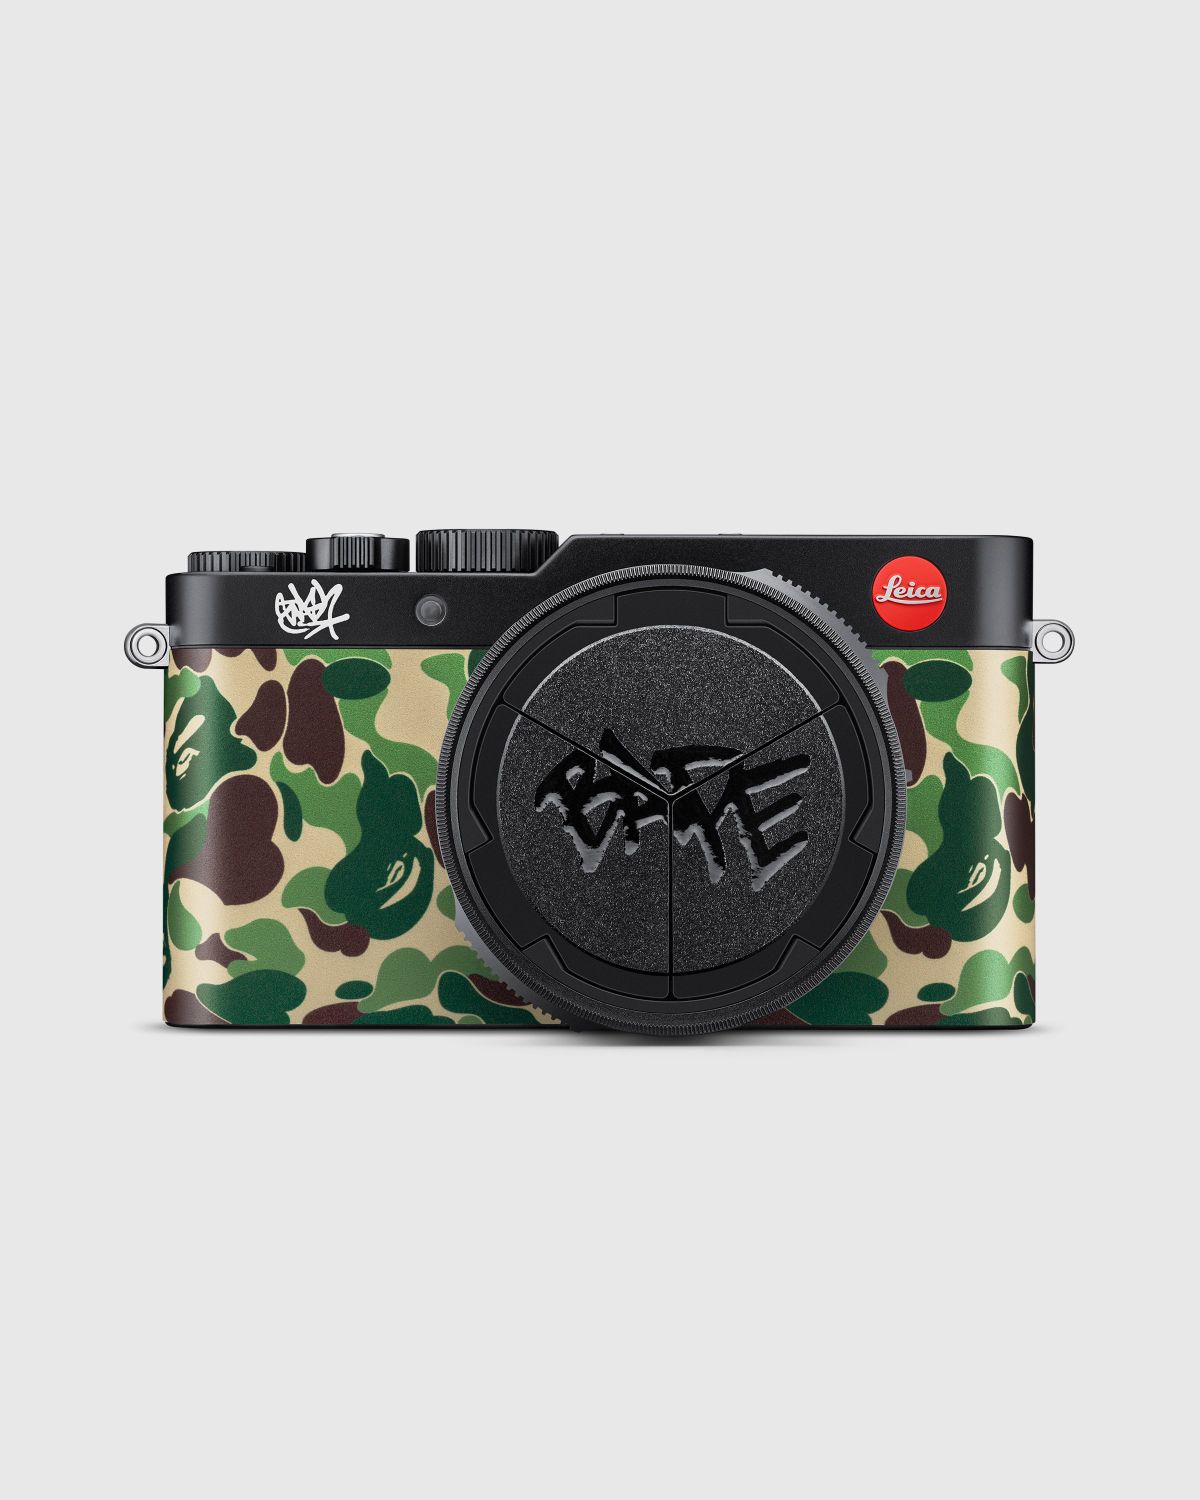 Leica – D-Lux 7 “A BATHING APE® x STASH” Edition Black - Cameras & Accessories - Multi - Image 1